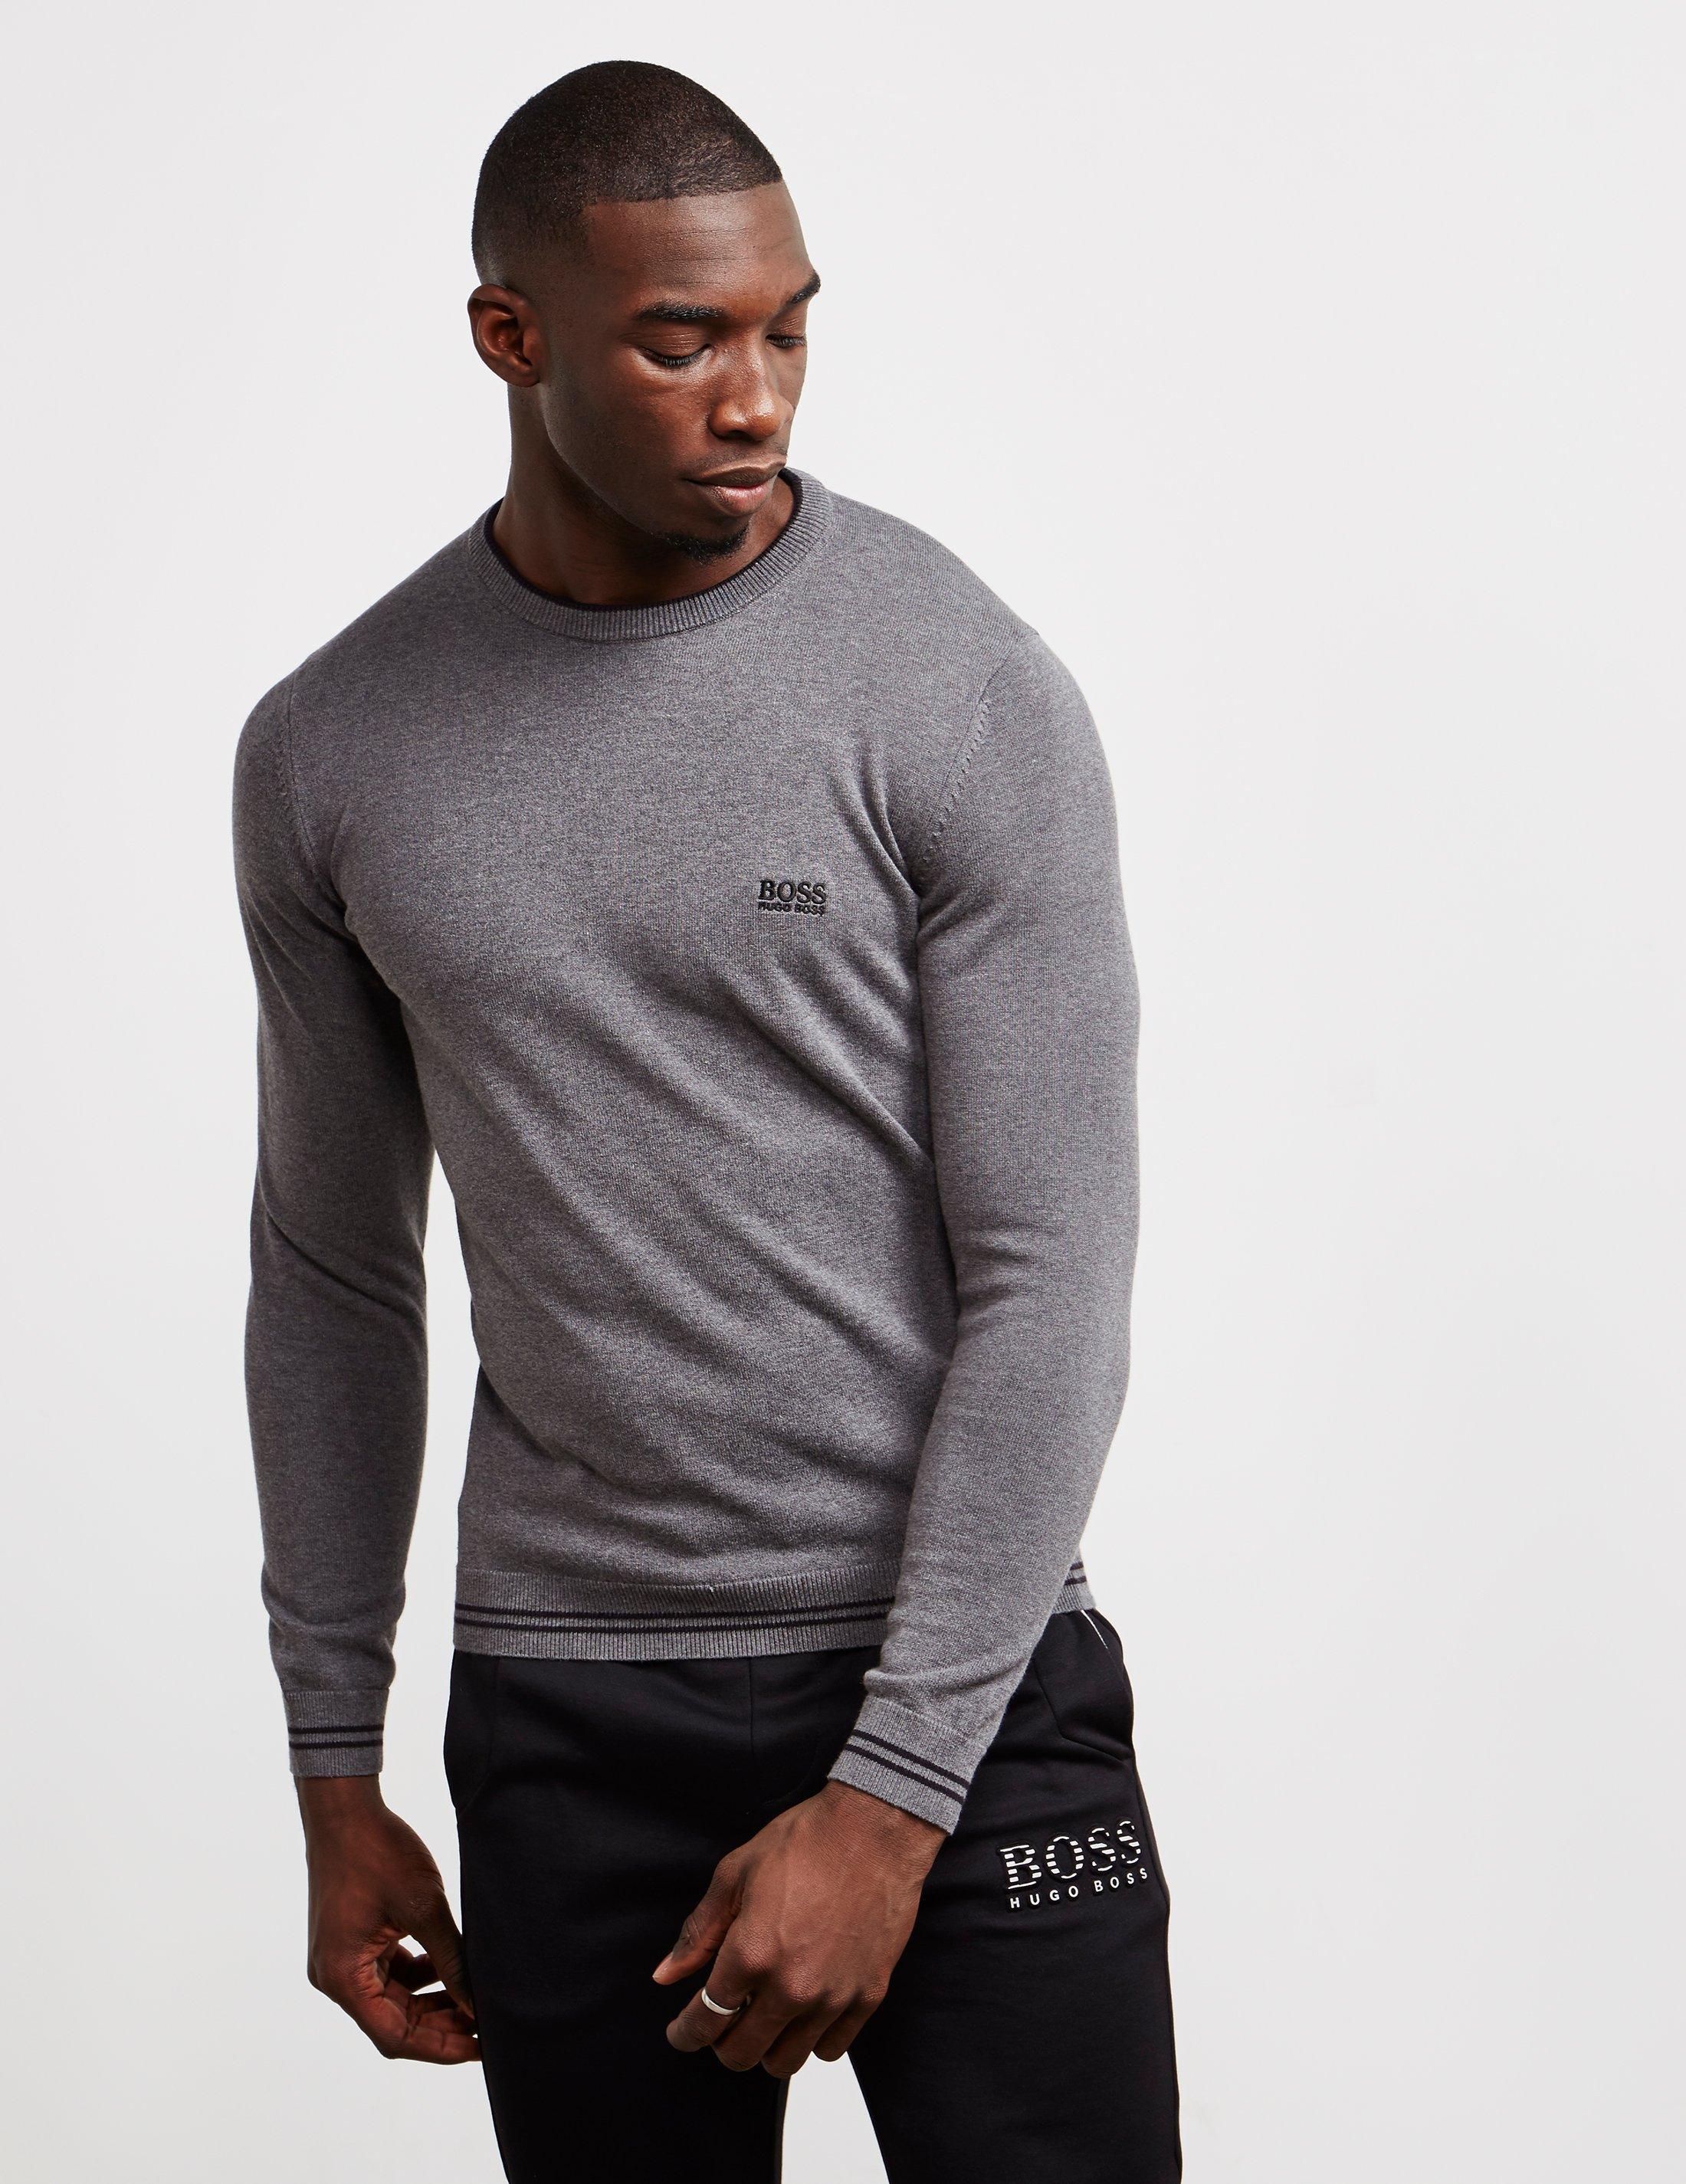 Lyst - BOSS Rimex Knitted Jumper Grey in Gray for Men